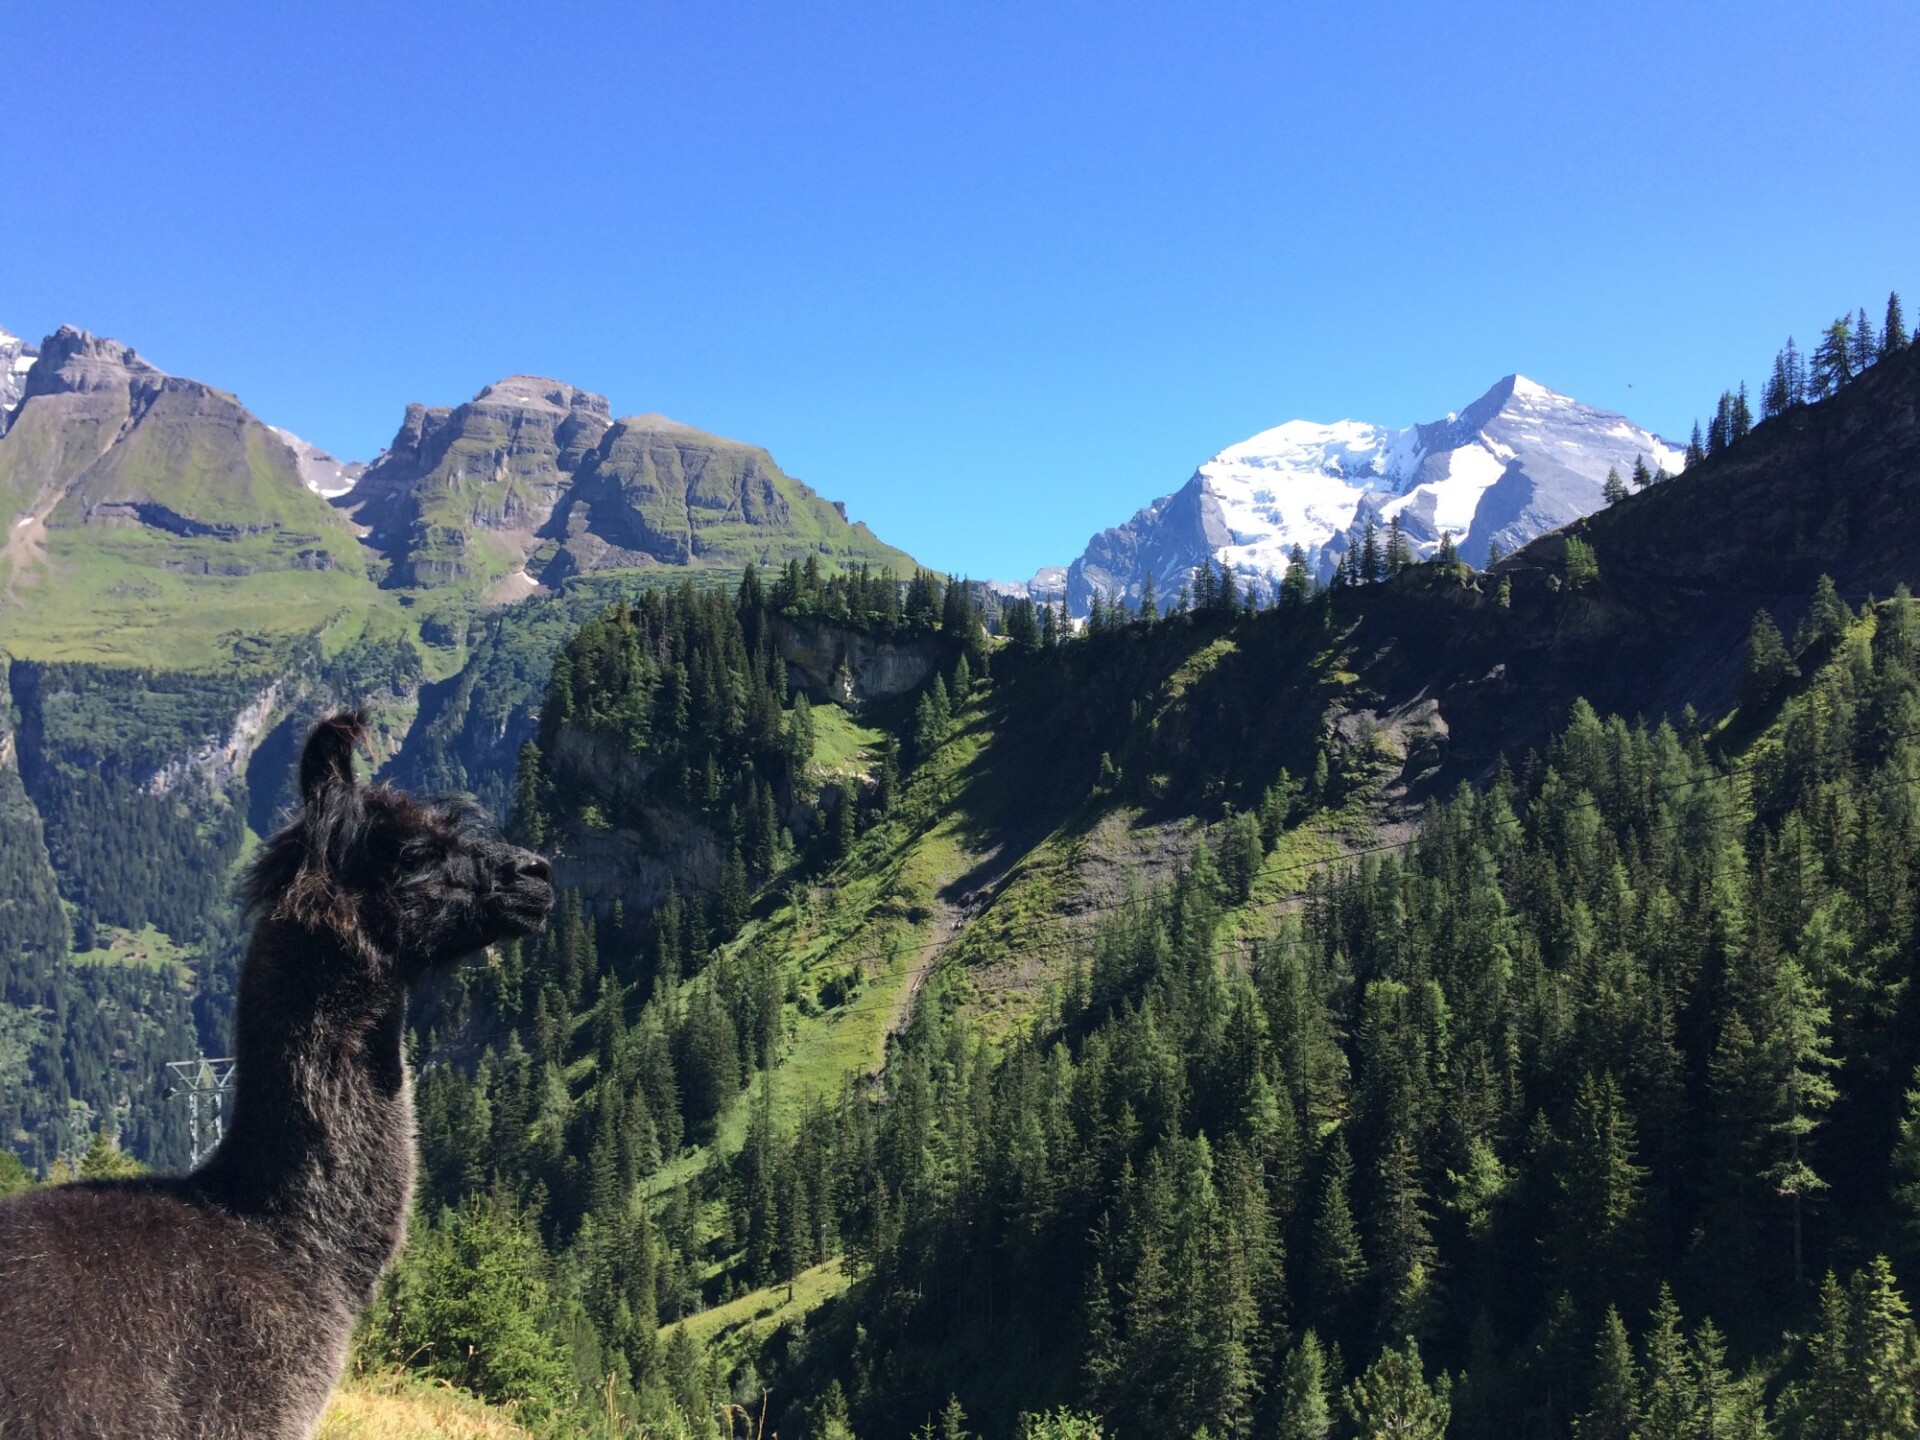 Llama in the Swiss Alps